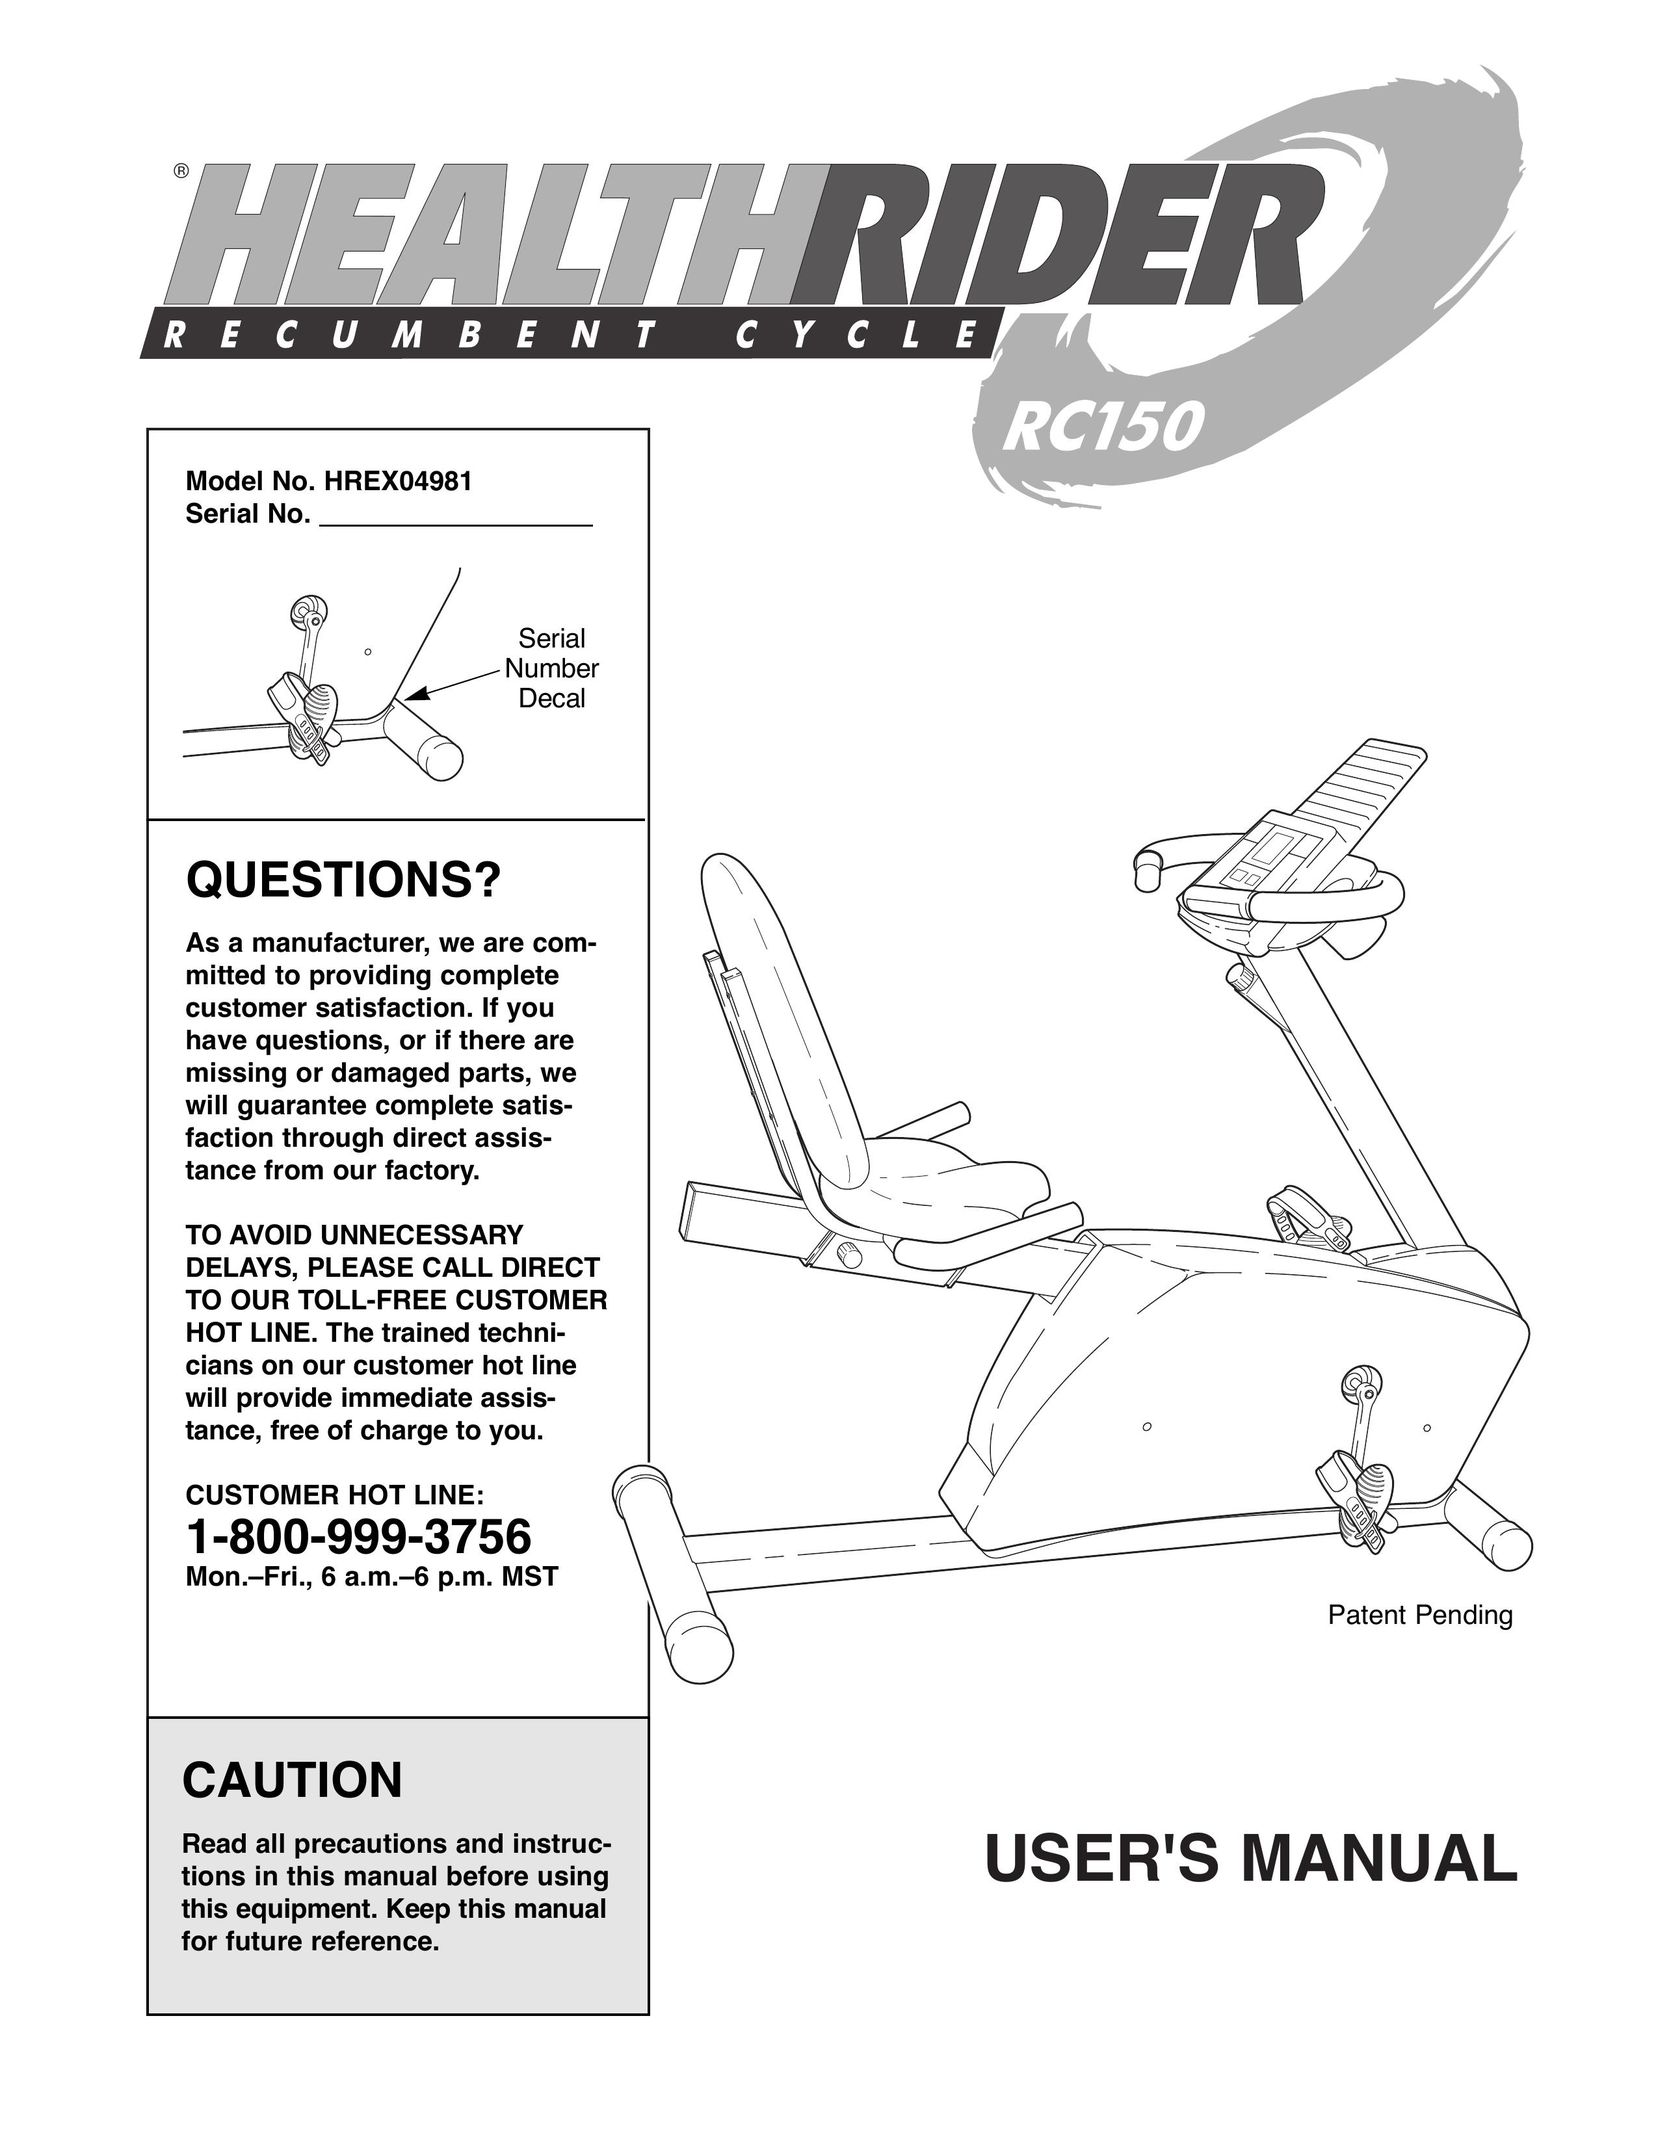 Healthrider HREX04981 Home Gym User Manual